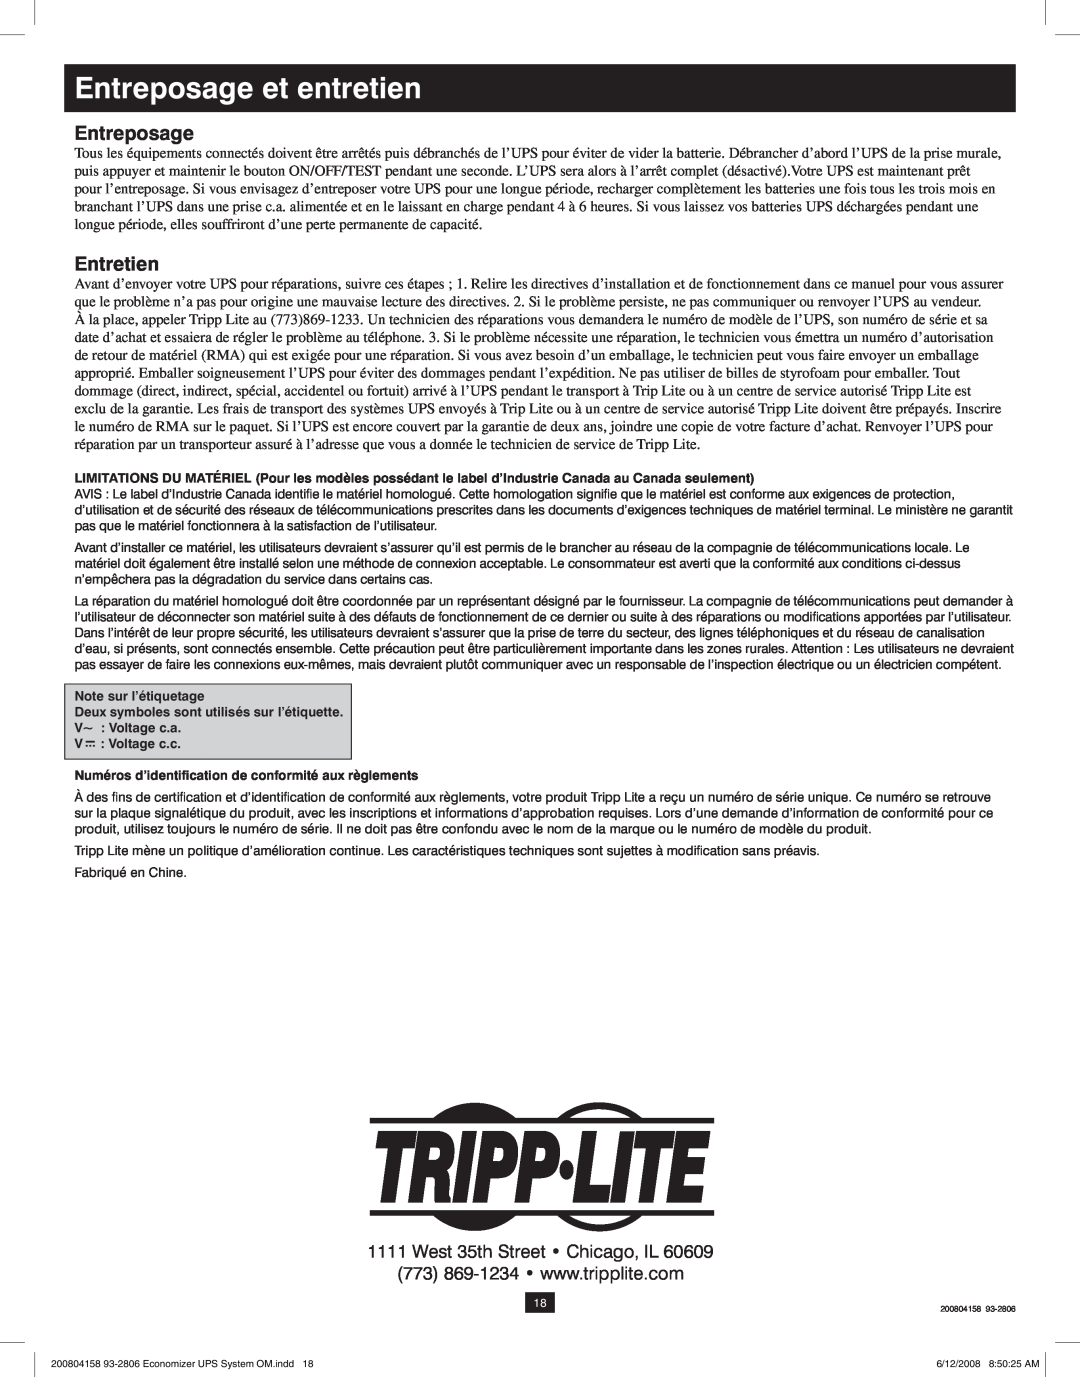 Tripp Lite ECO UPS System owner manual Entreposage et entretien, Entretien, West 35th Street Chicago, IL 